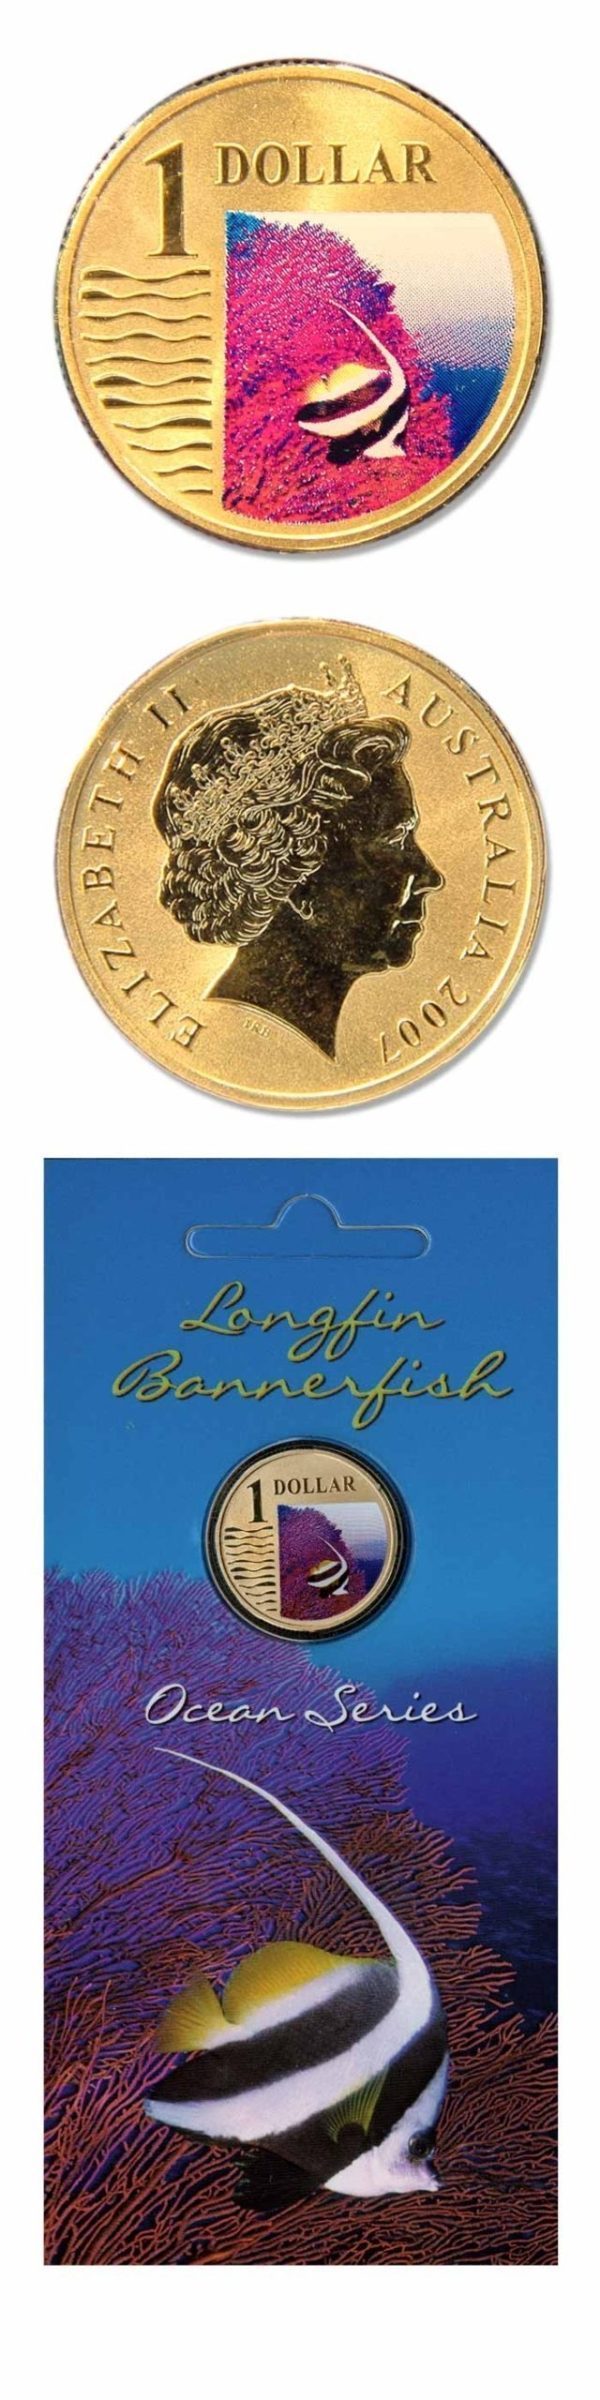 Australia - Longfin Bannerfish - One Dollar - 2007 - Ocean Series - Display Card